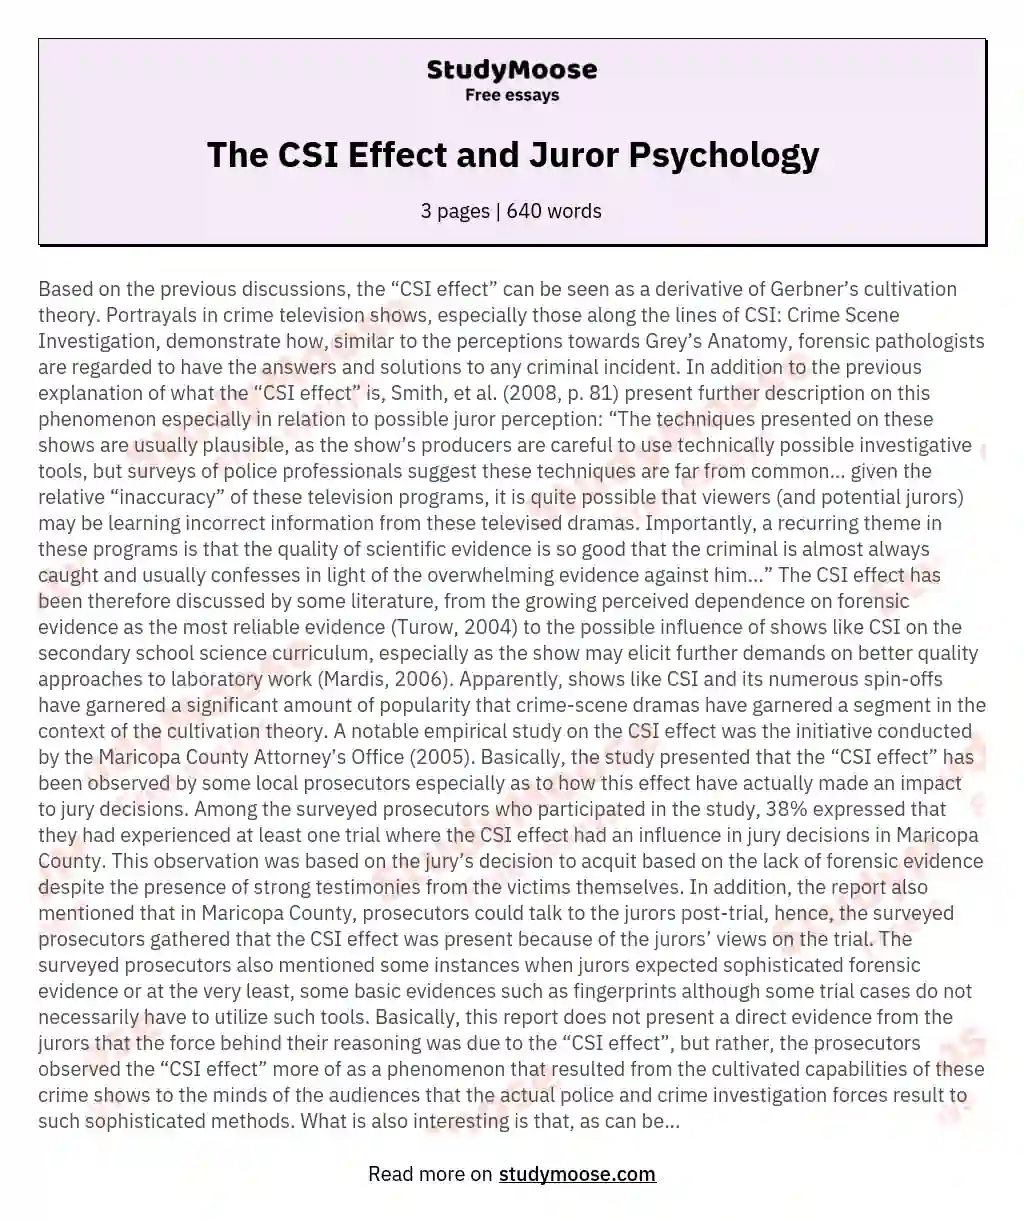 The CSI Effect and Juror Psychology essay